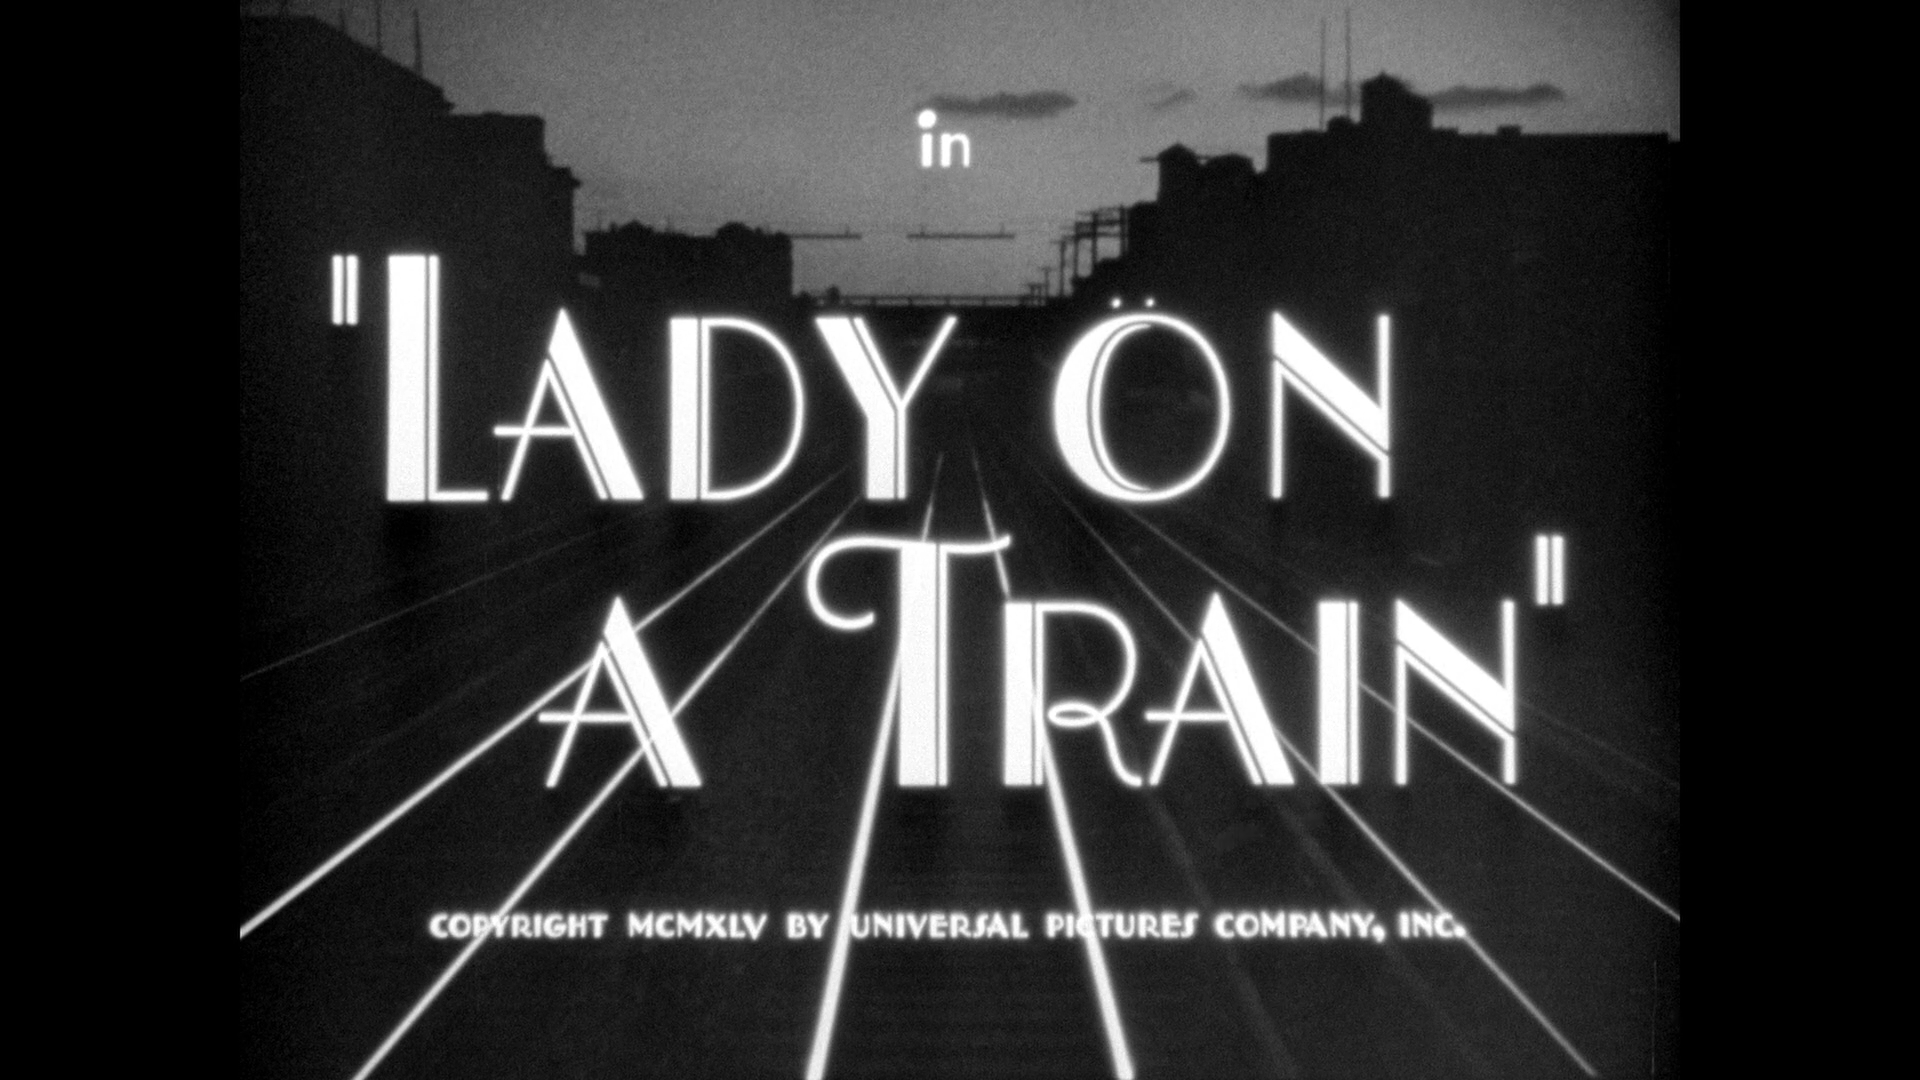 Film Noir: The Dark Side of Cinema IX [Lady on a Train / Tangier